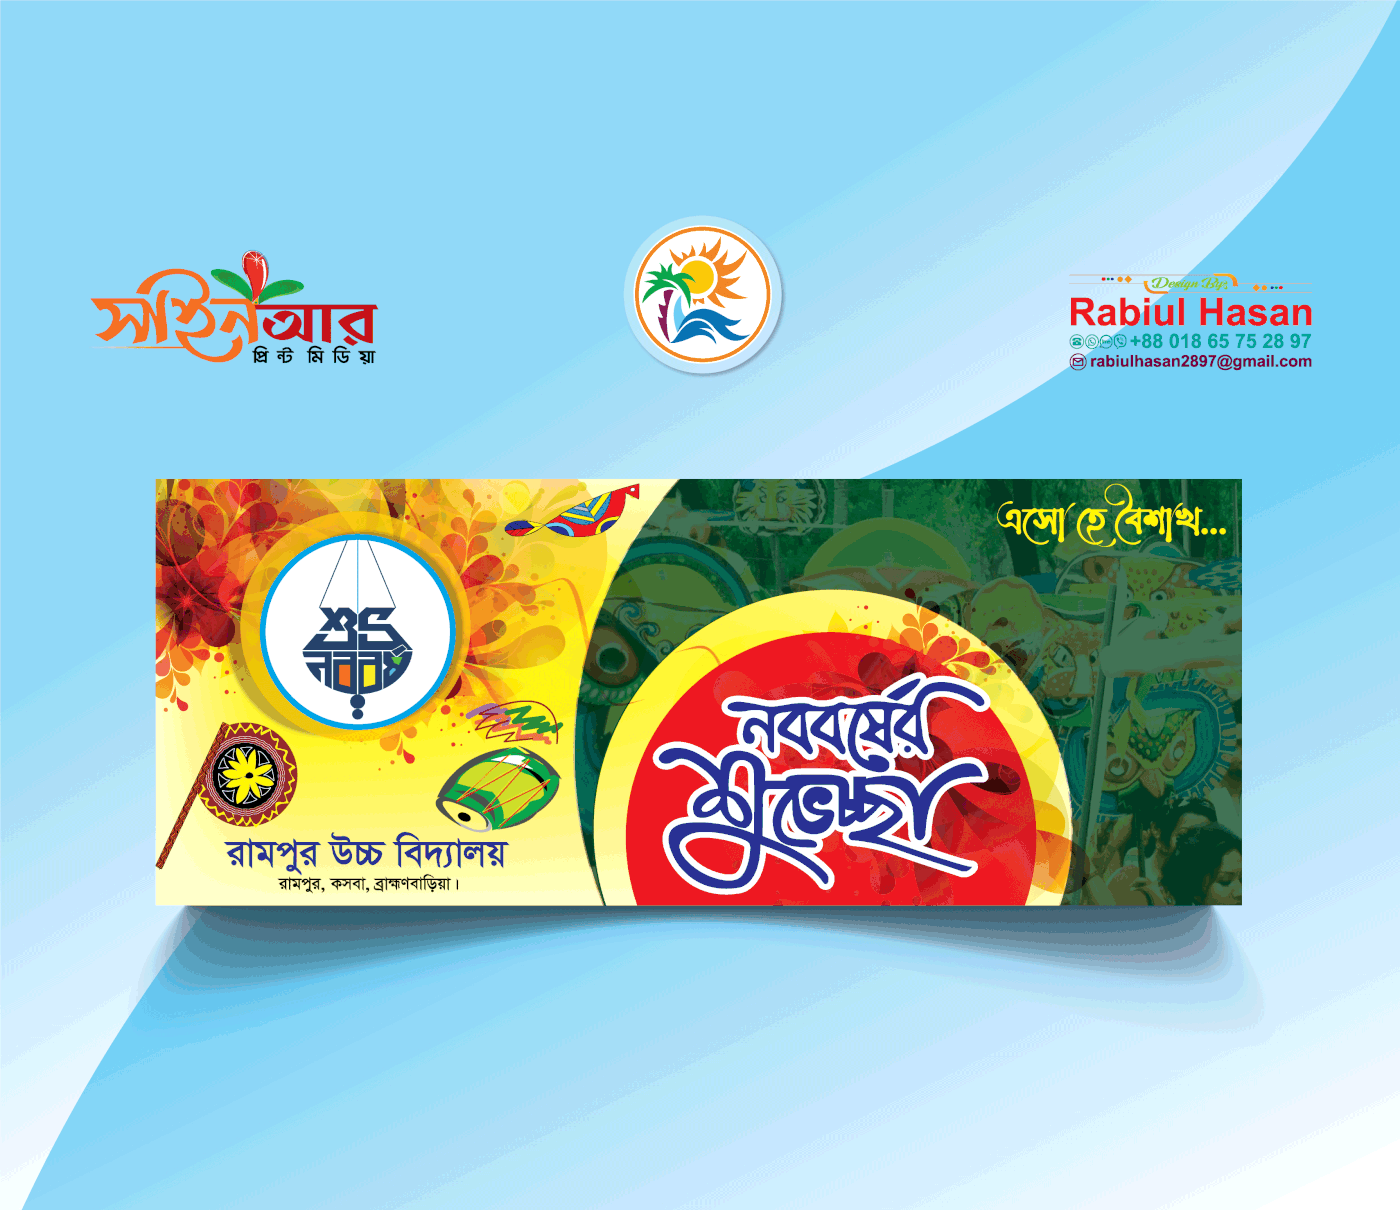 bangla new year banner boishakh Pohela Boishakh পহেলা বৈশাখ পহেলা বৈশাখ ইমেজ পহেলা বৈশাখ ব্যানার বাংলা নববর্ষ শুভ নববর্ষ